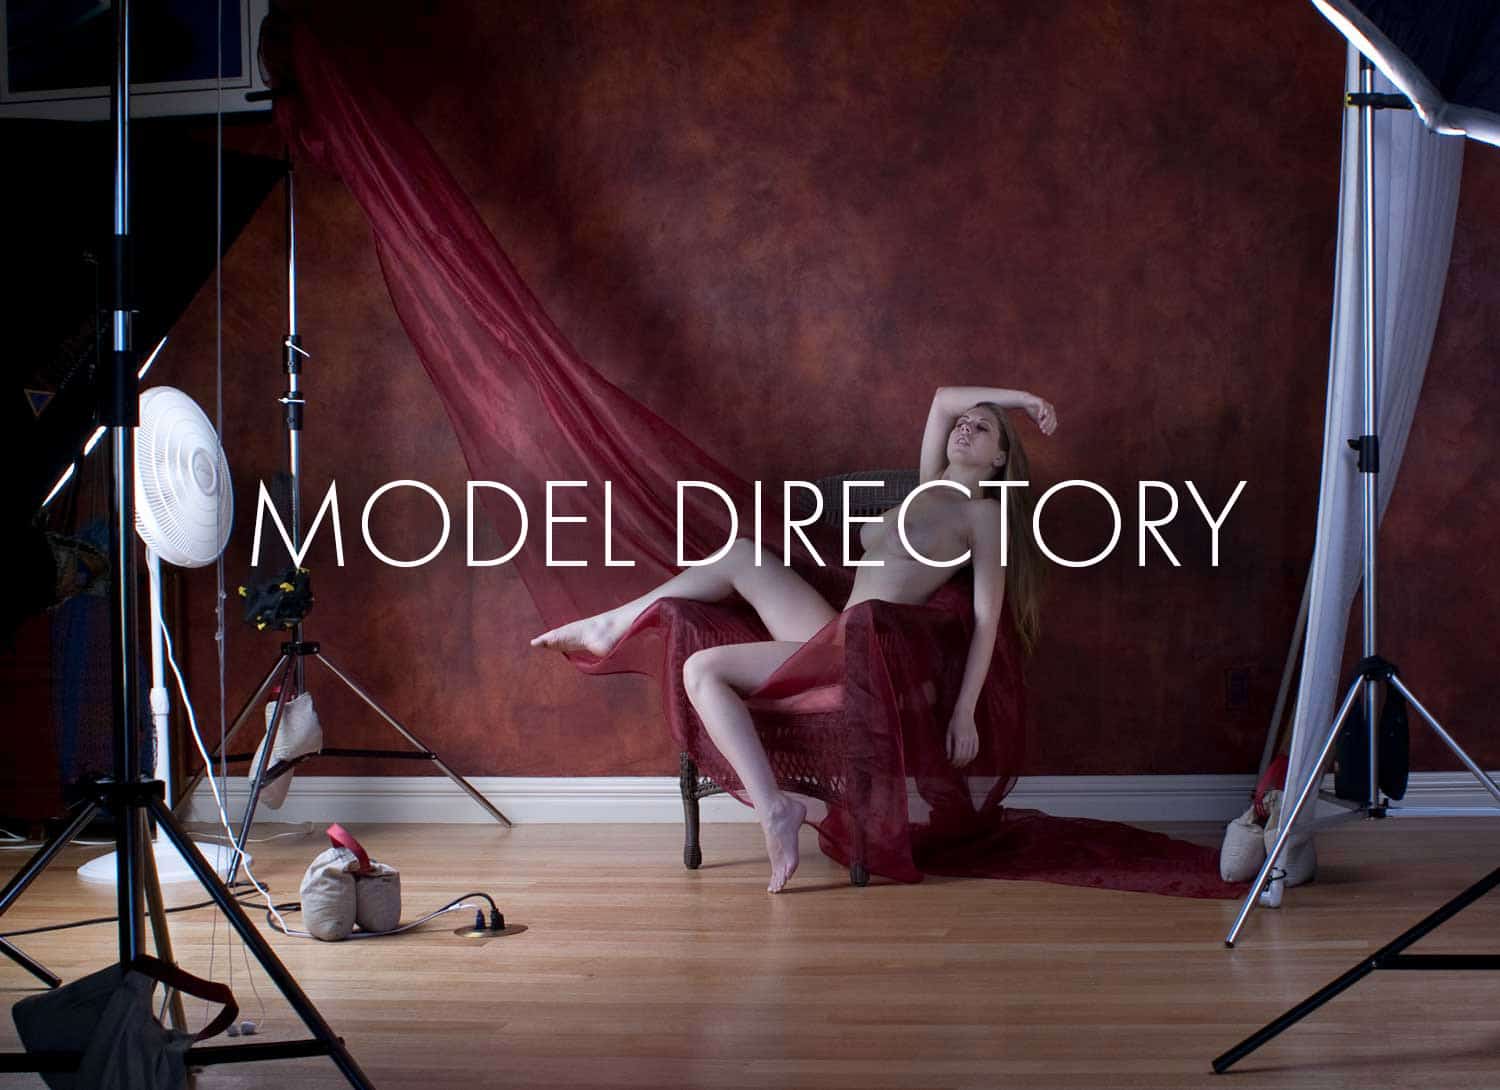 Art Nude Model Directory at ADCook.com